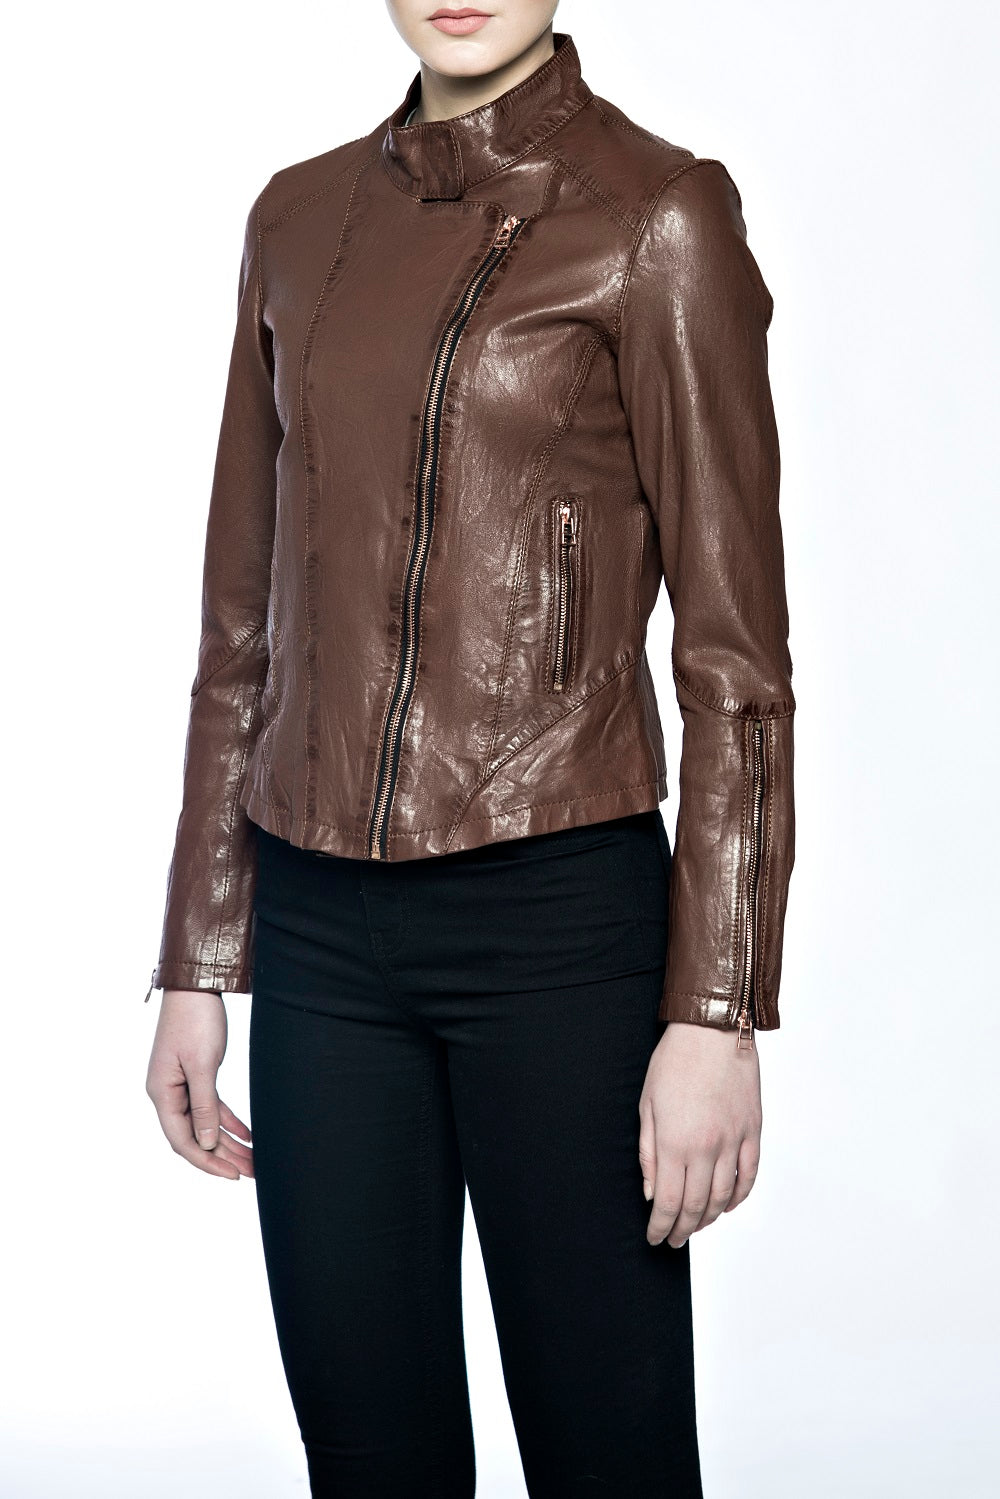 Bano eeMee | proudly Canadian premium luxury leather jackets